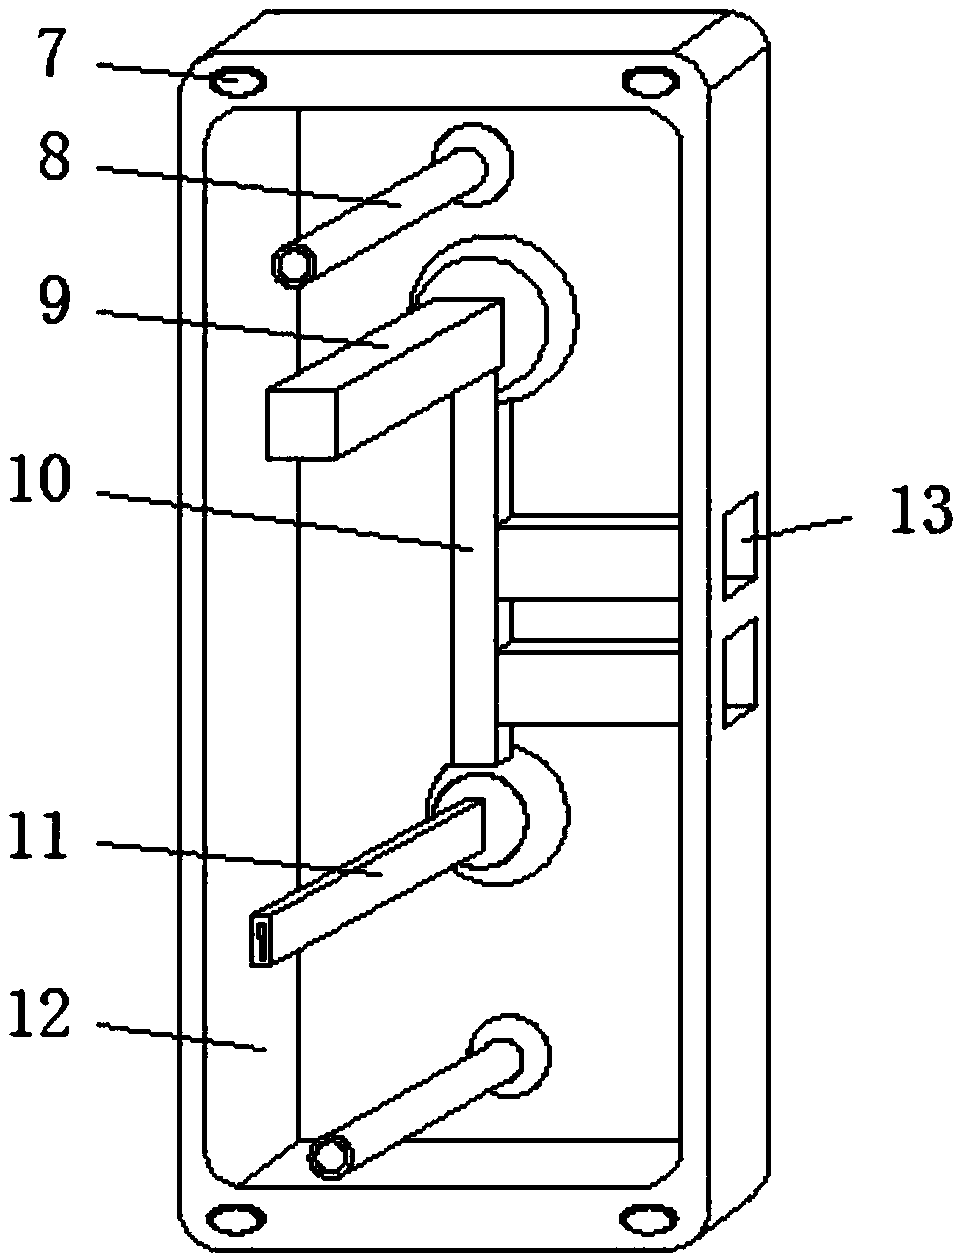 Mechanical lock for safety door